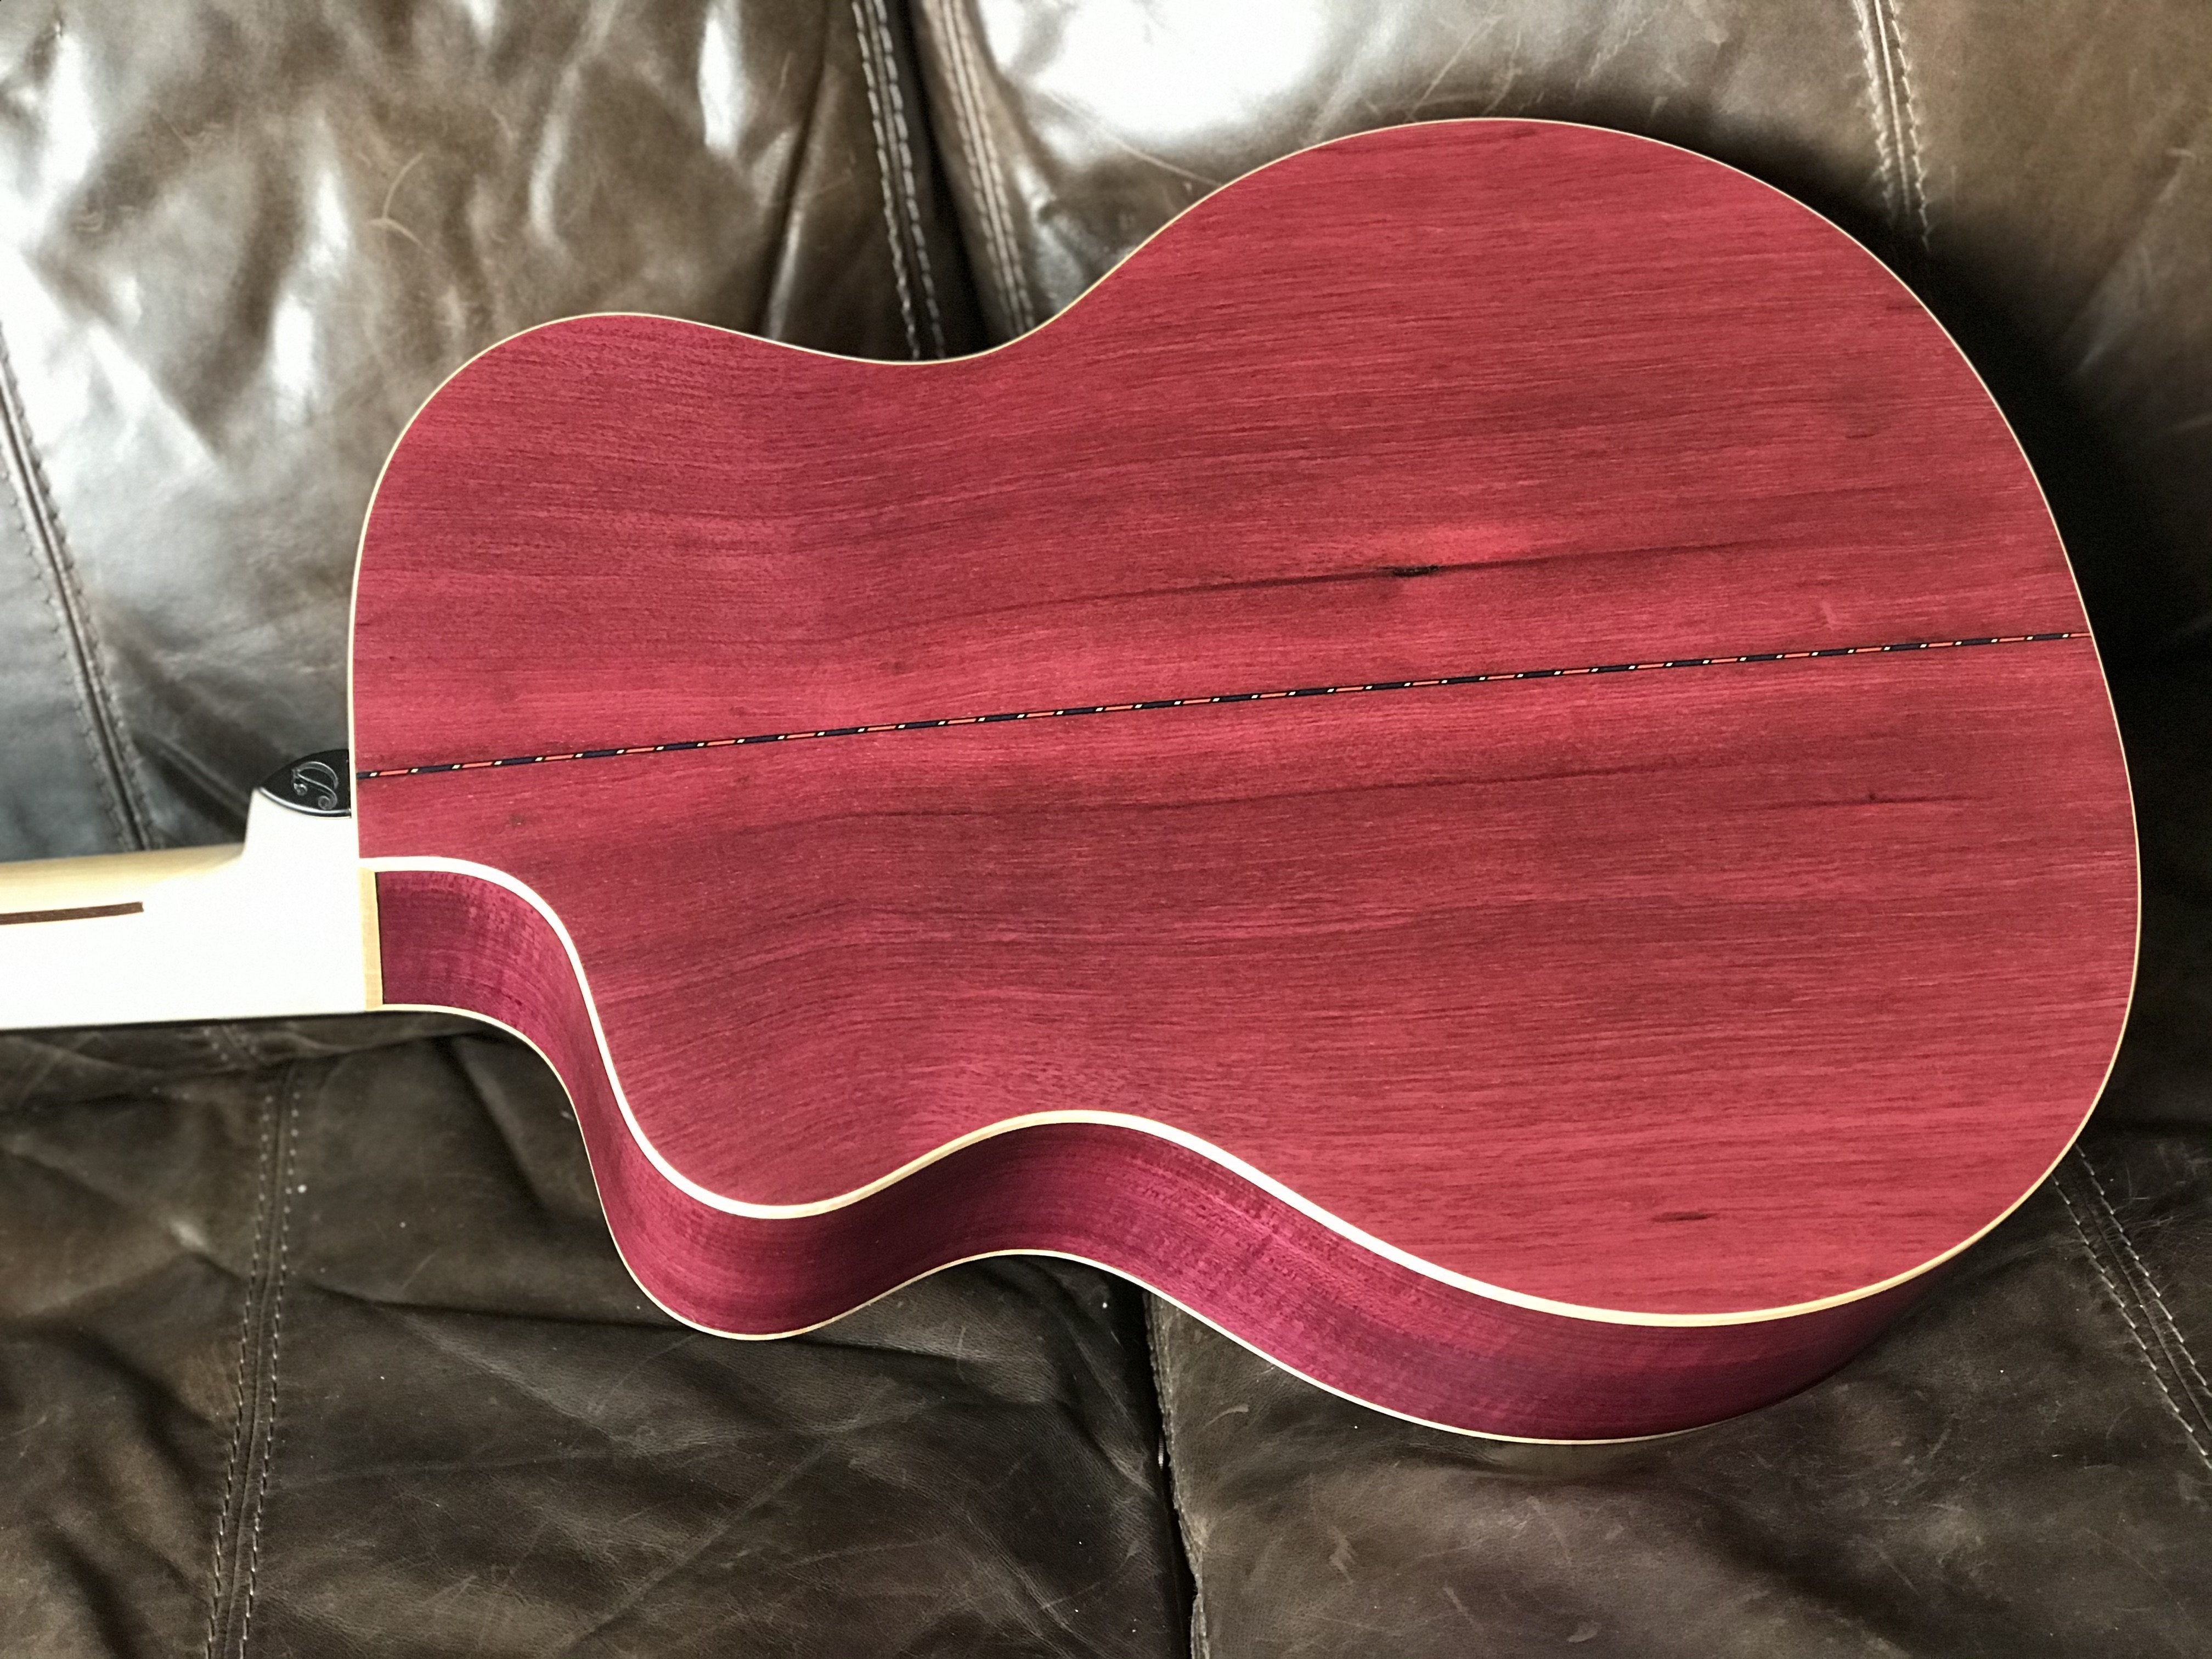 Dowina Purple Heart GAC, Acoustic Guitar for sale at Richards Guitars.